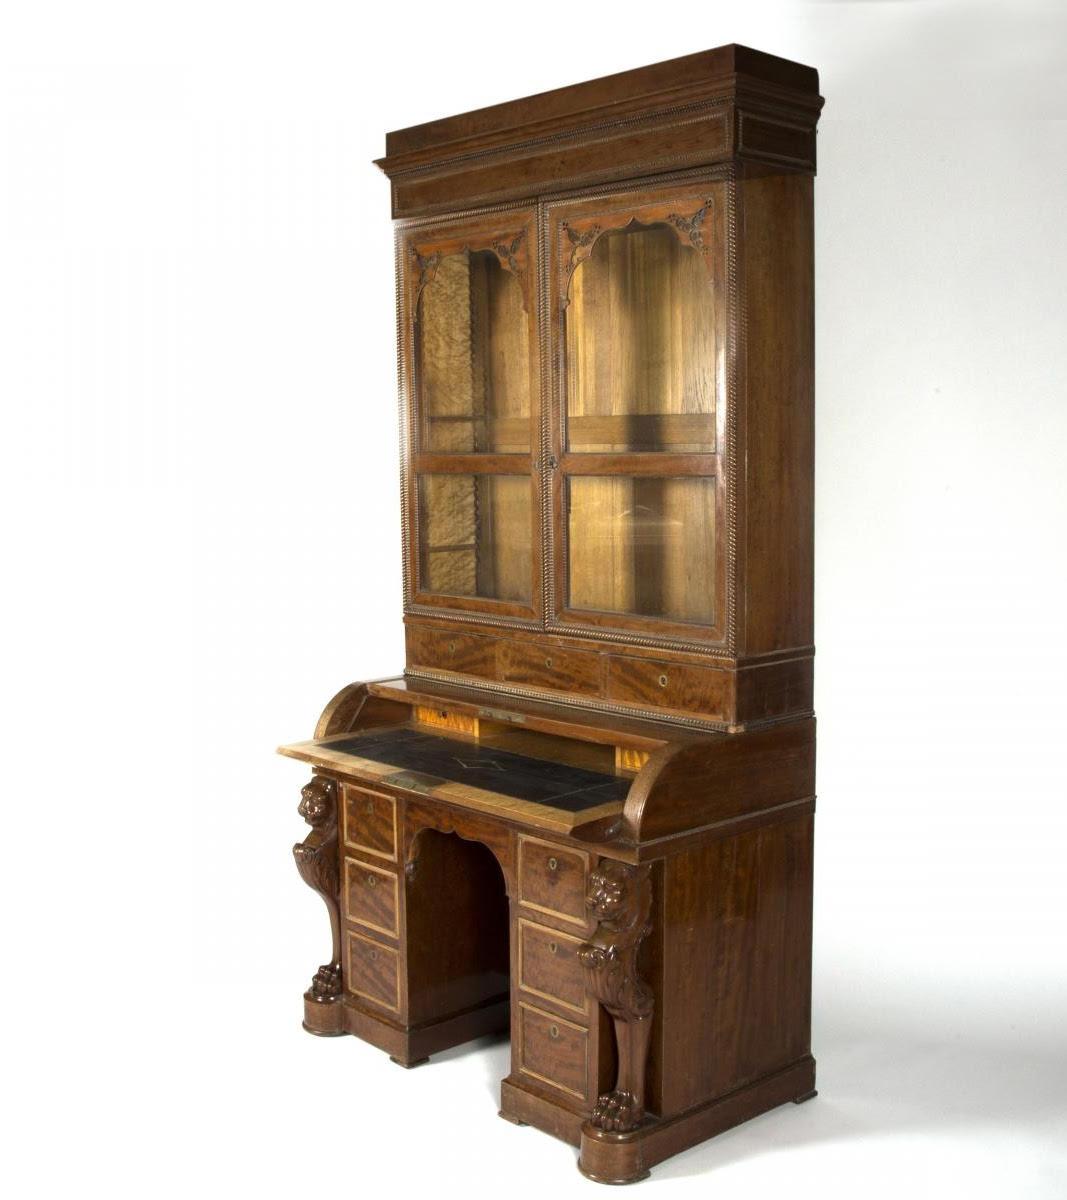 French Napoleon III Period Desk, 19th century. For Sale